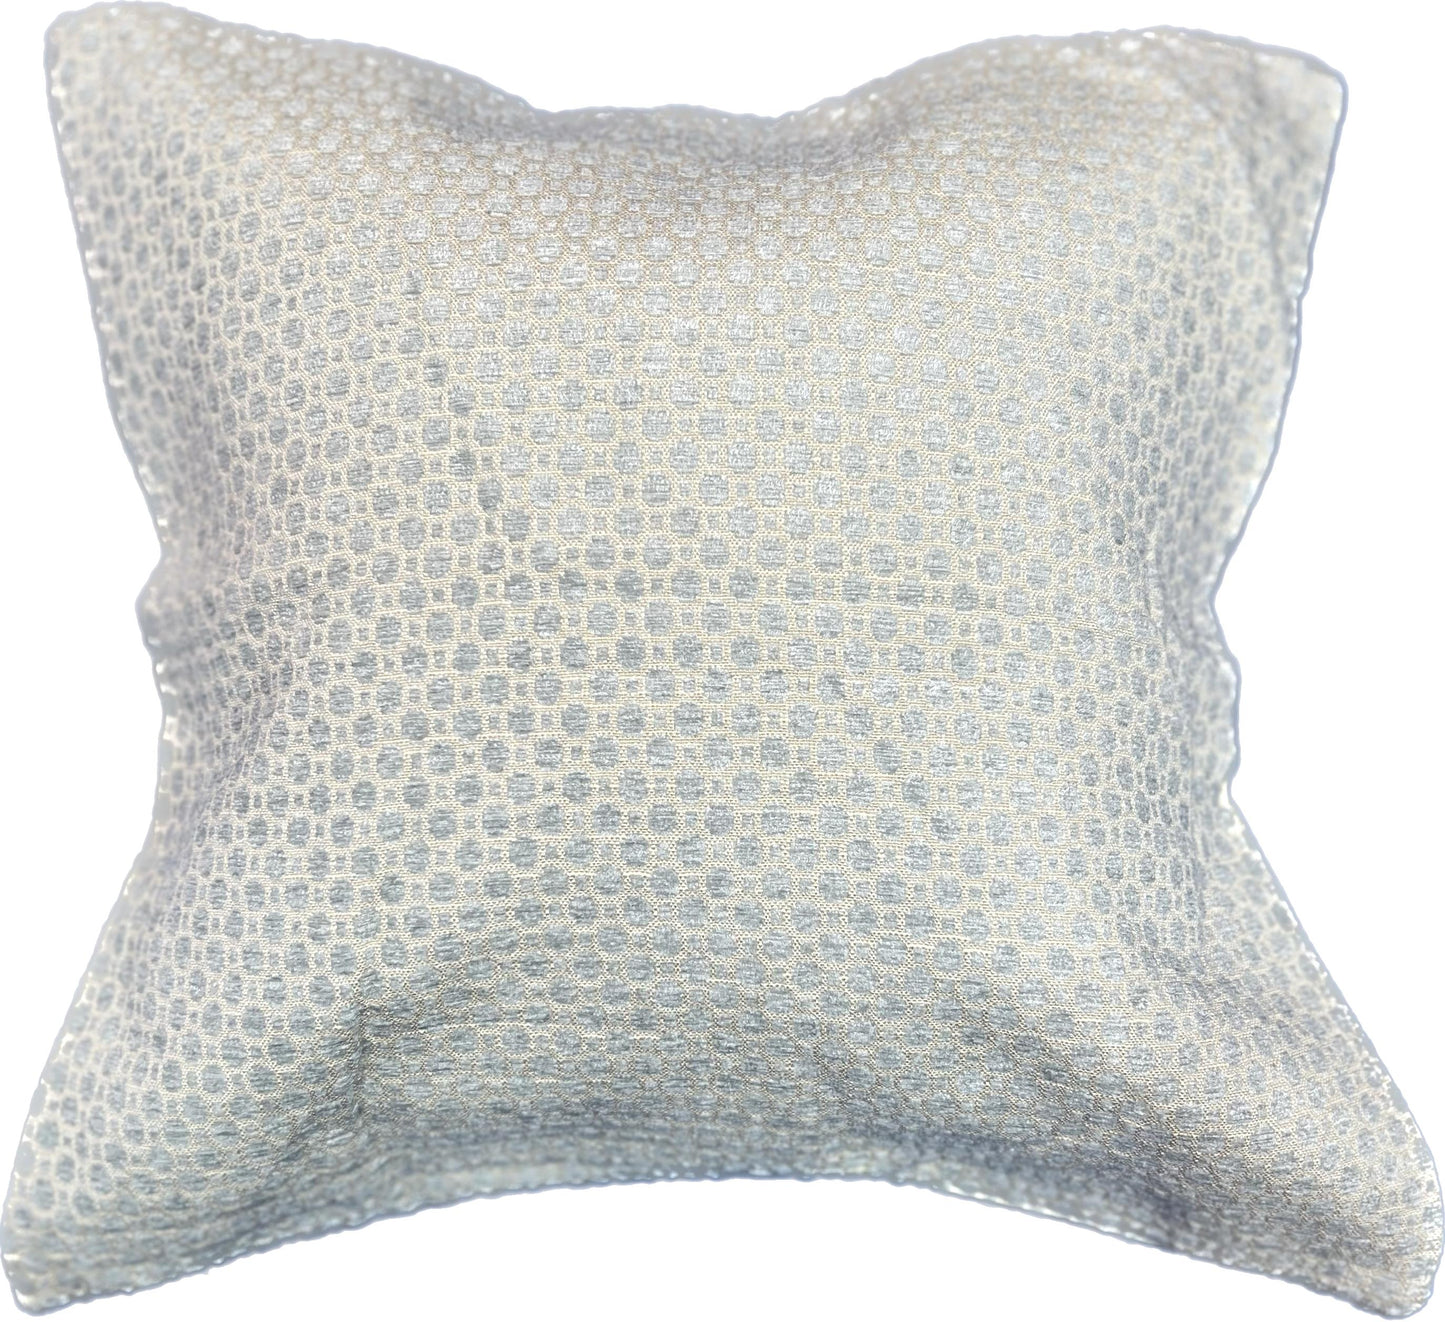 17"x17" Chenille Dot Pillow Cover